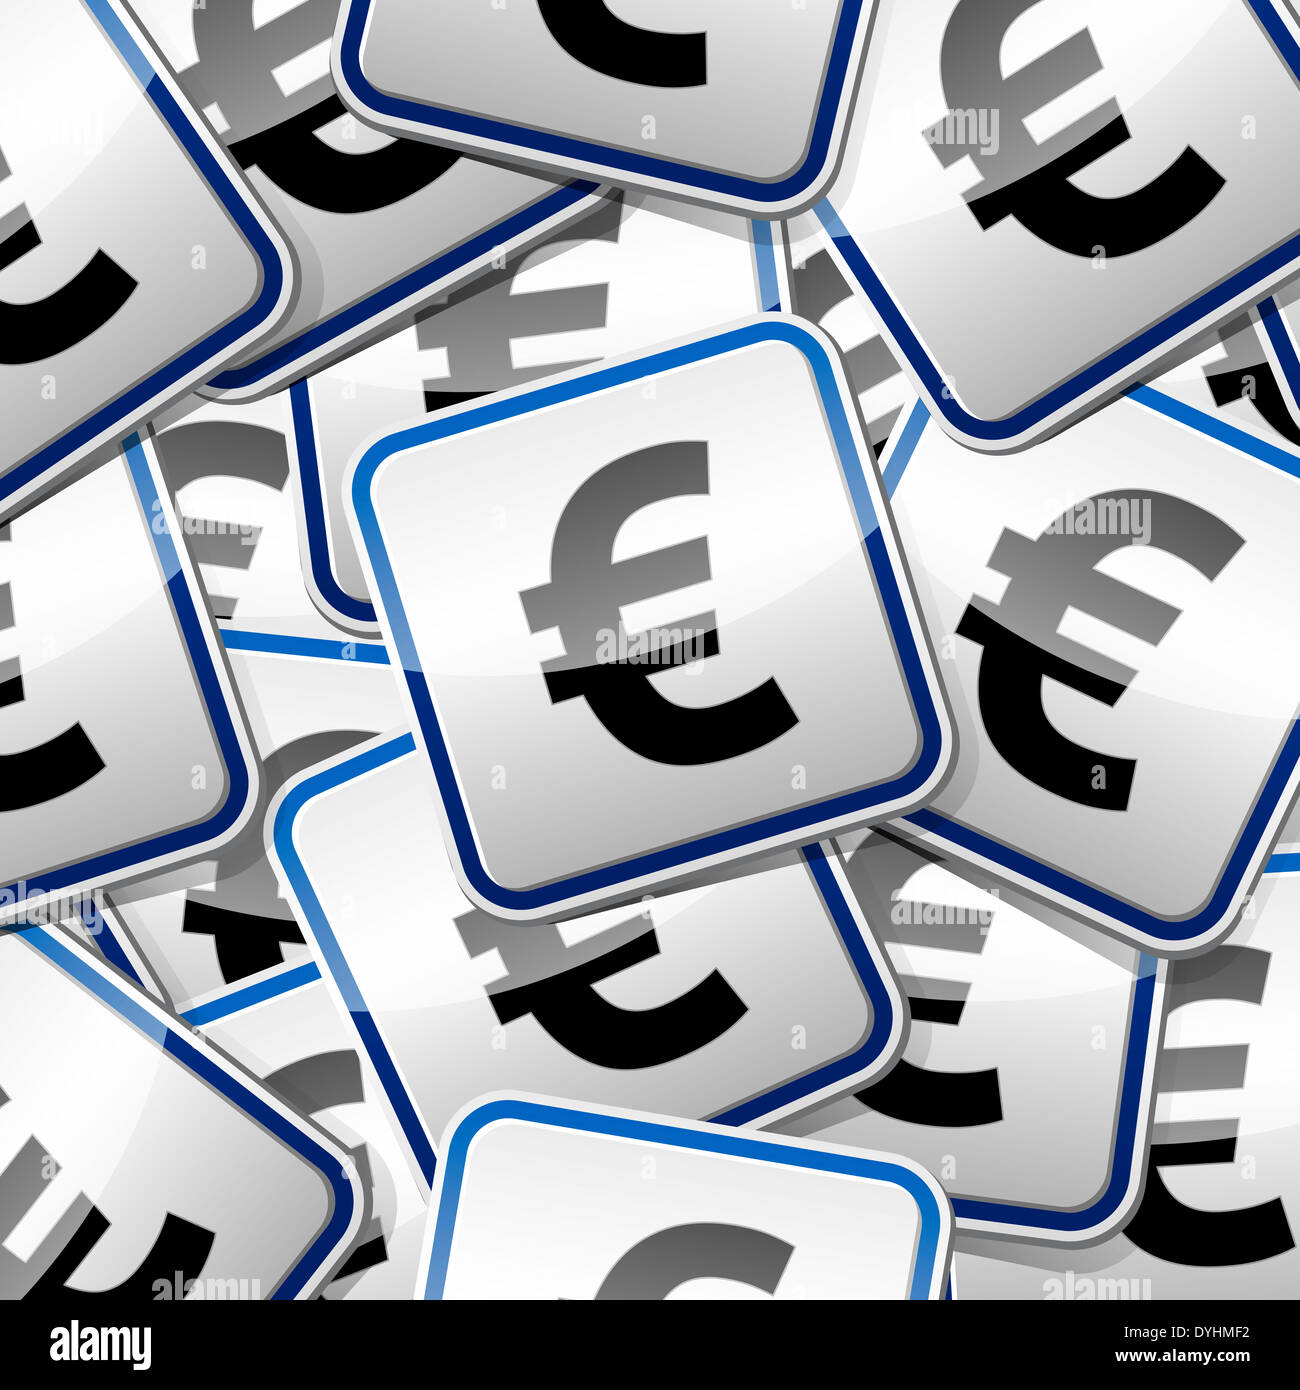 Euro money sign sticker collection. Stock Photo